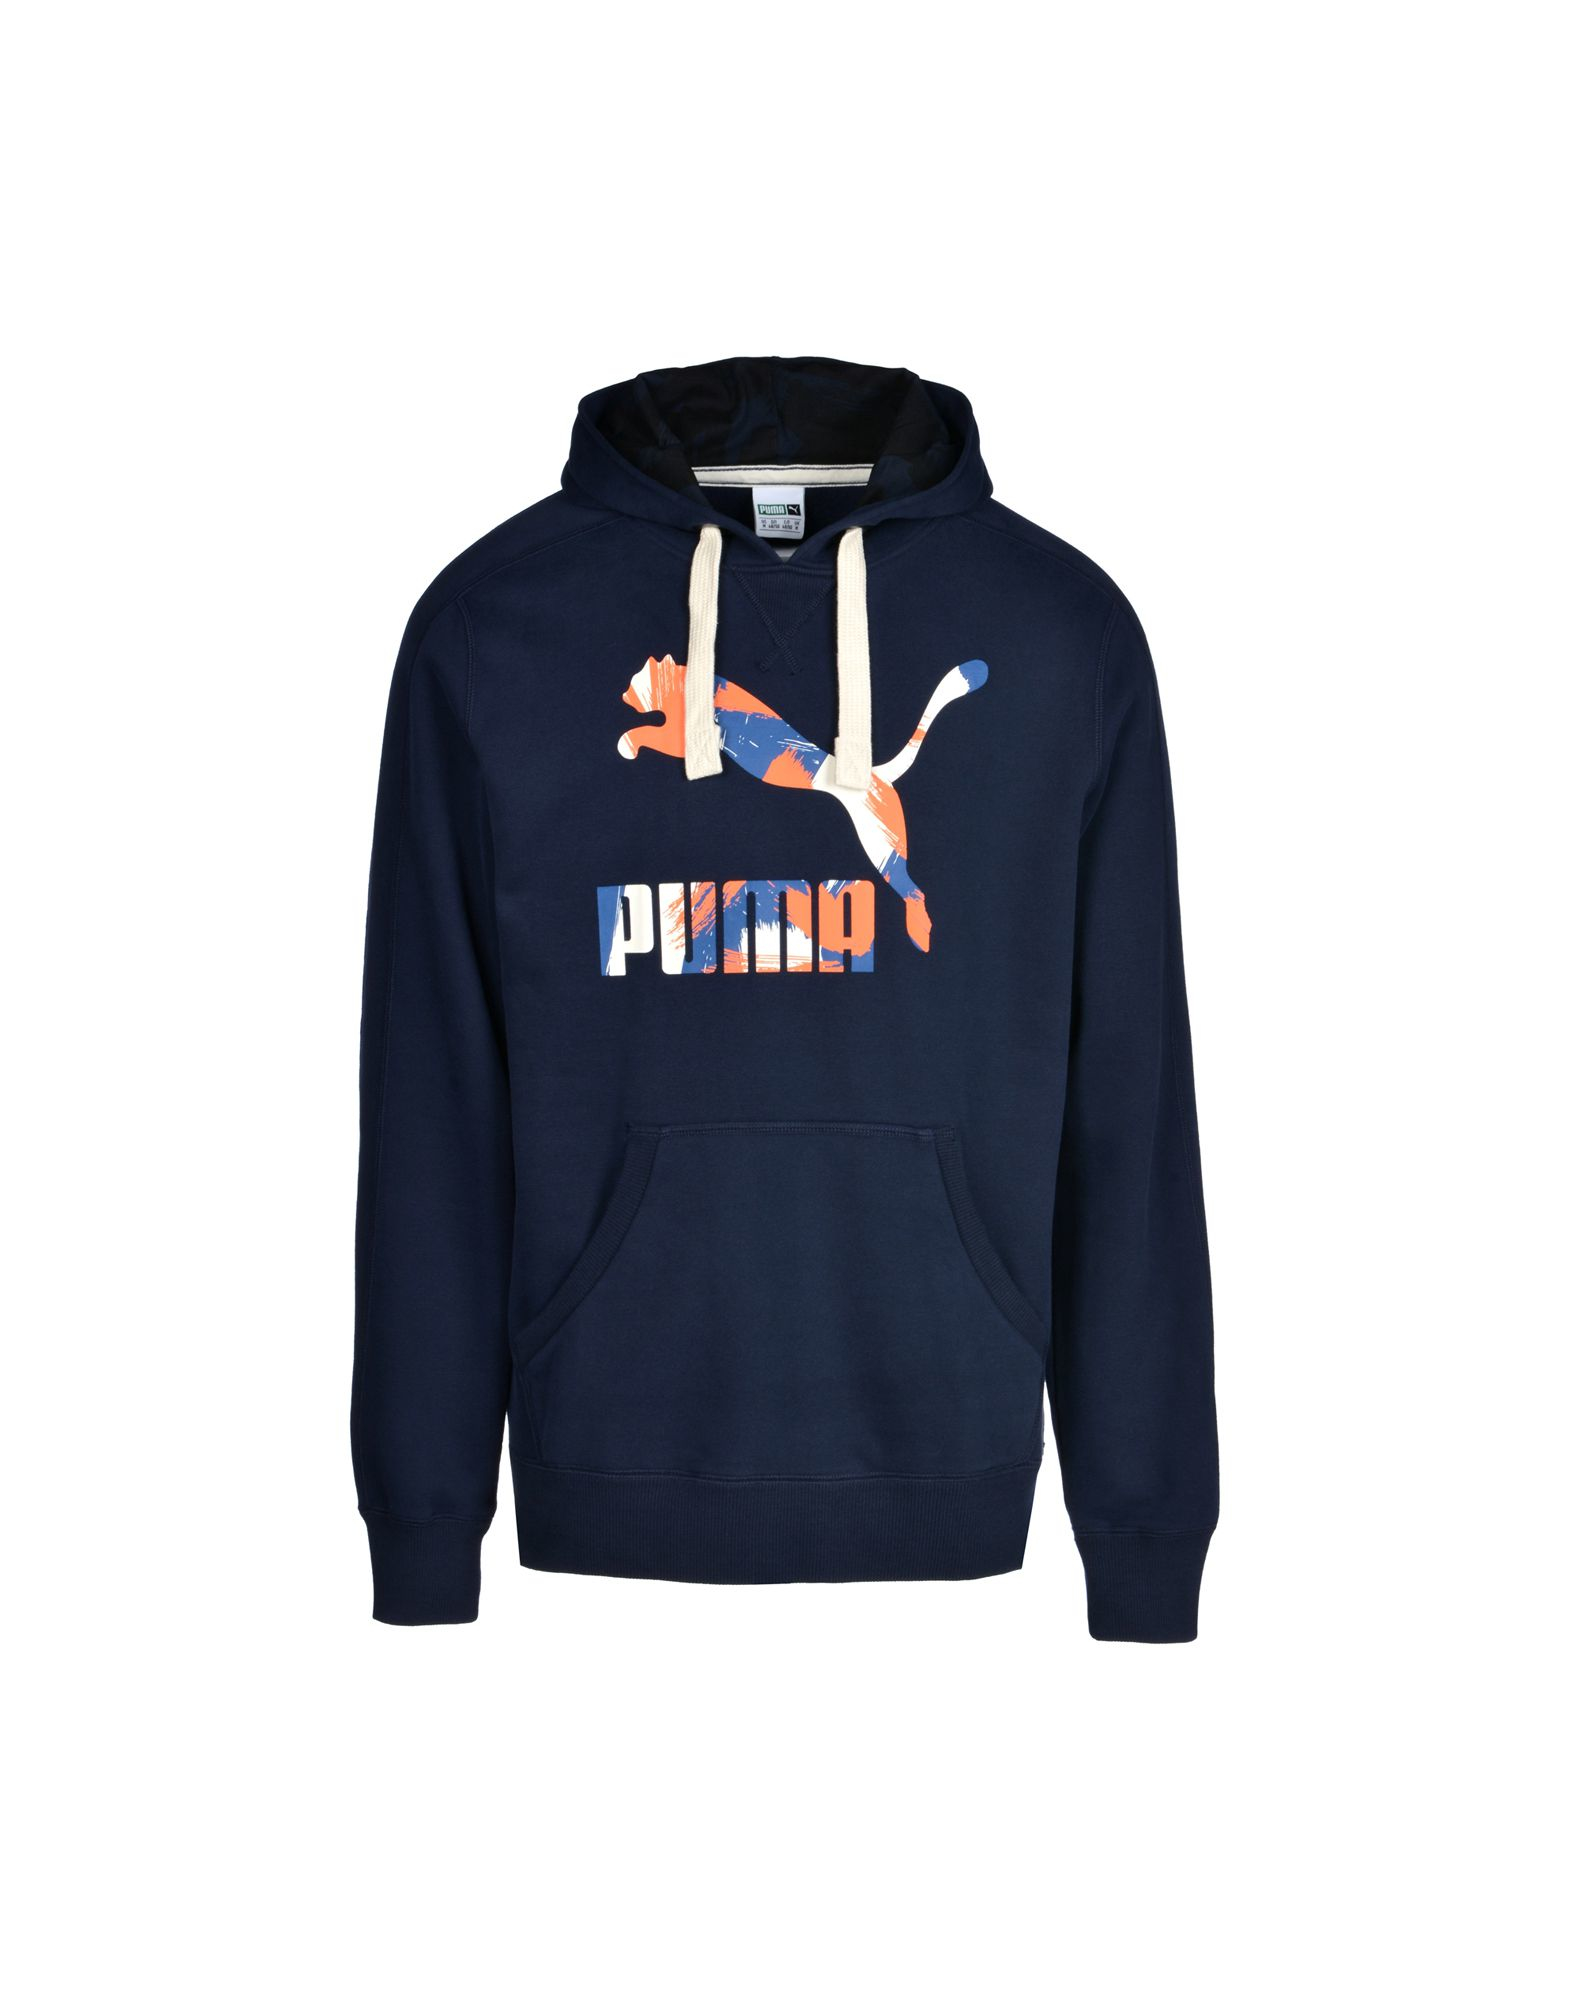 Lyst - Puma Sweatshirt in Blue for Men